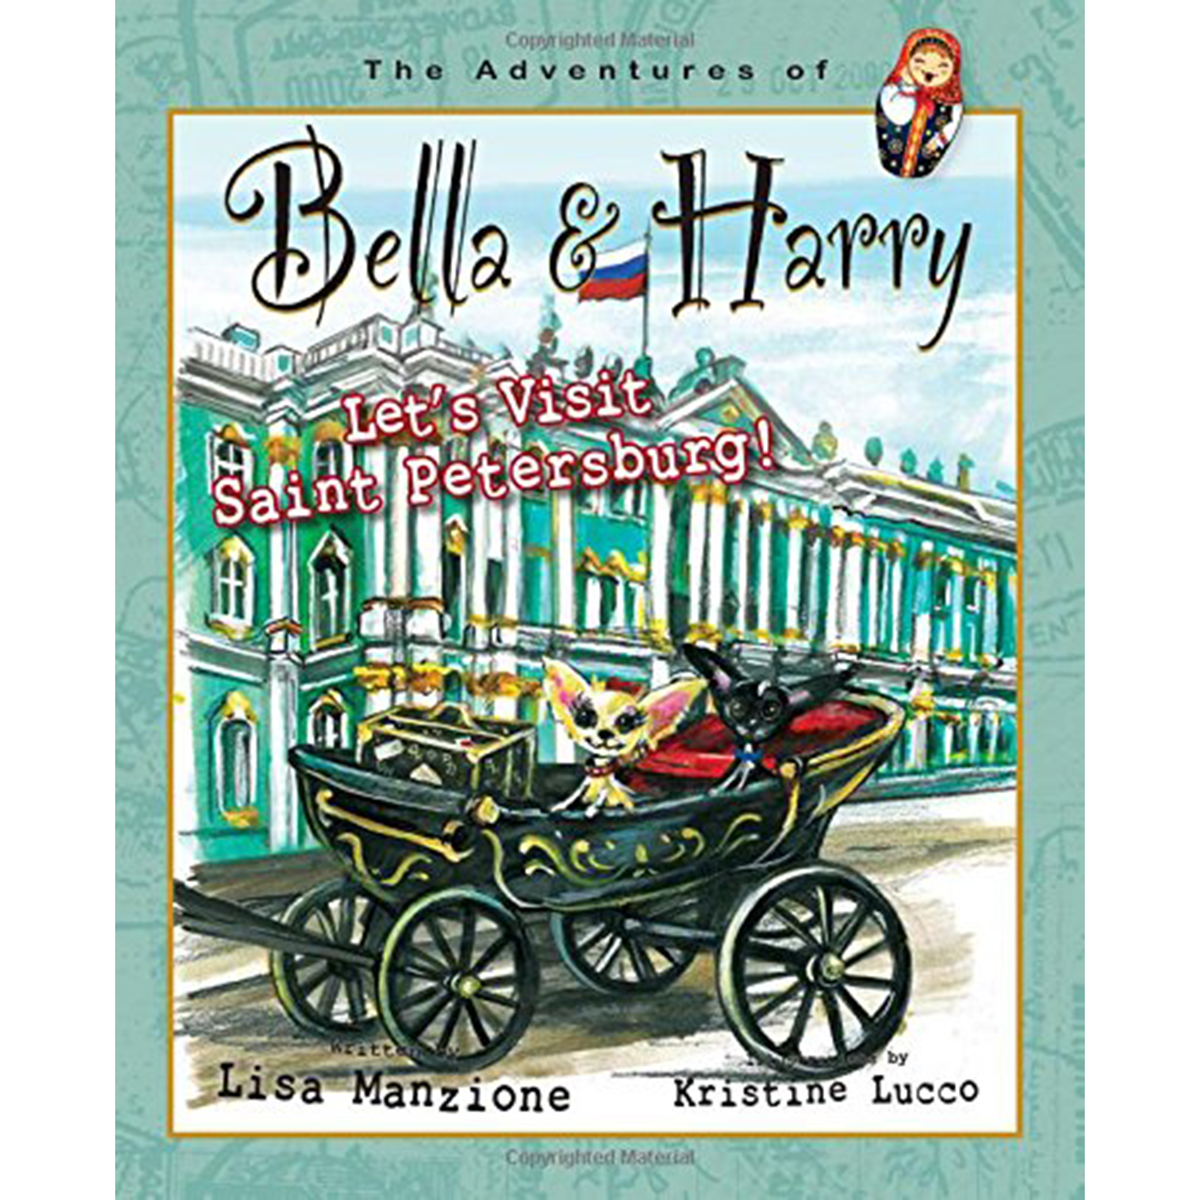 Let's Visit Saint Petersburg!: Adventures of Bella & Harry